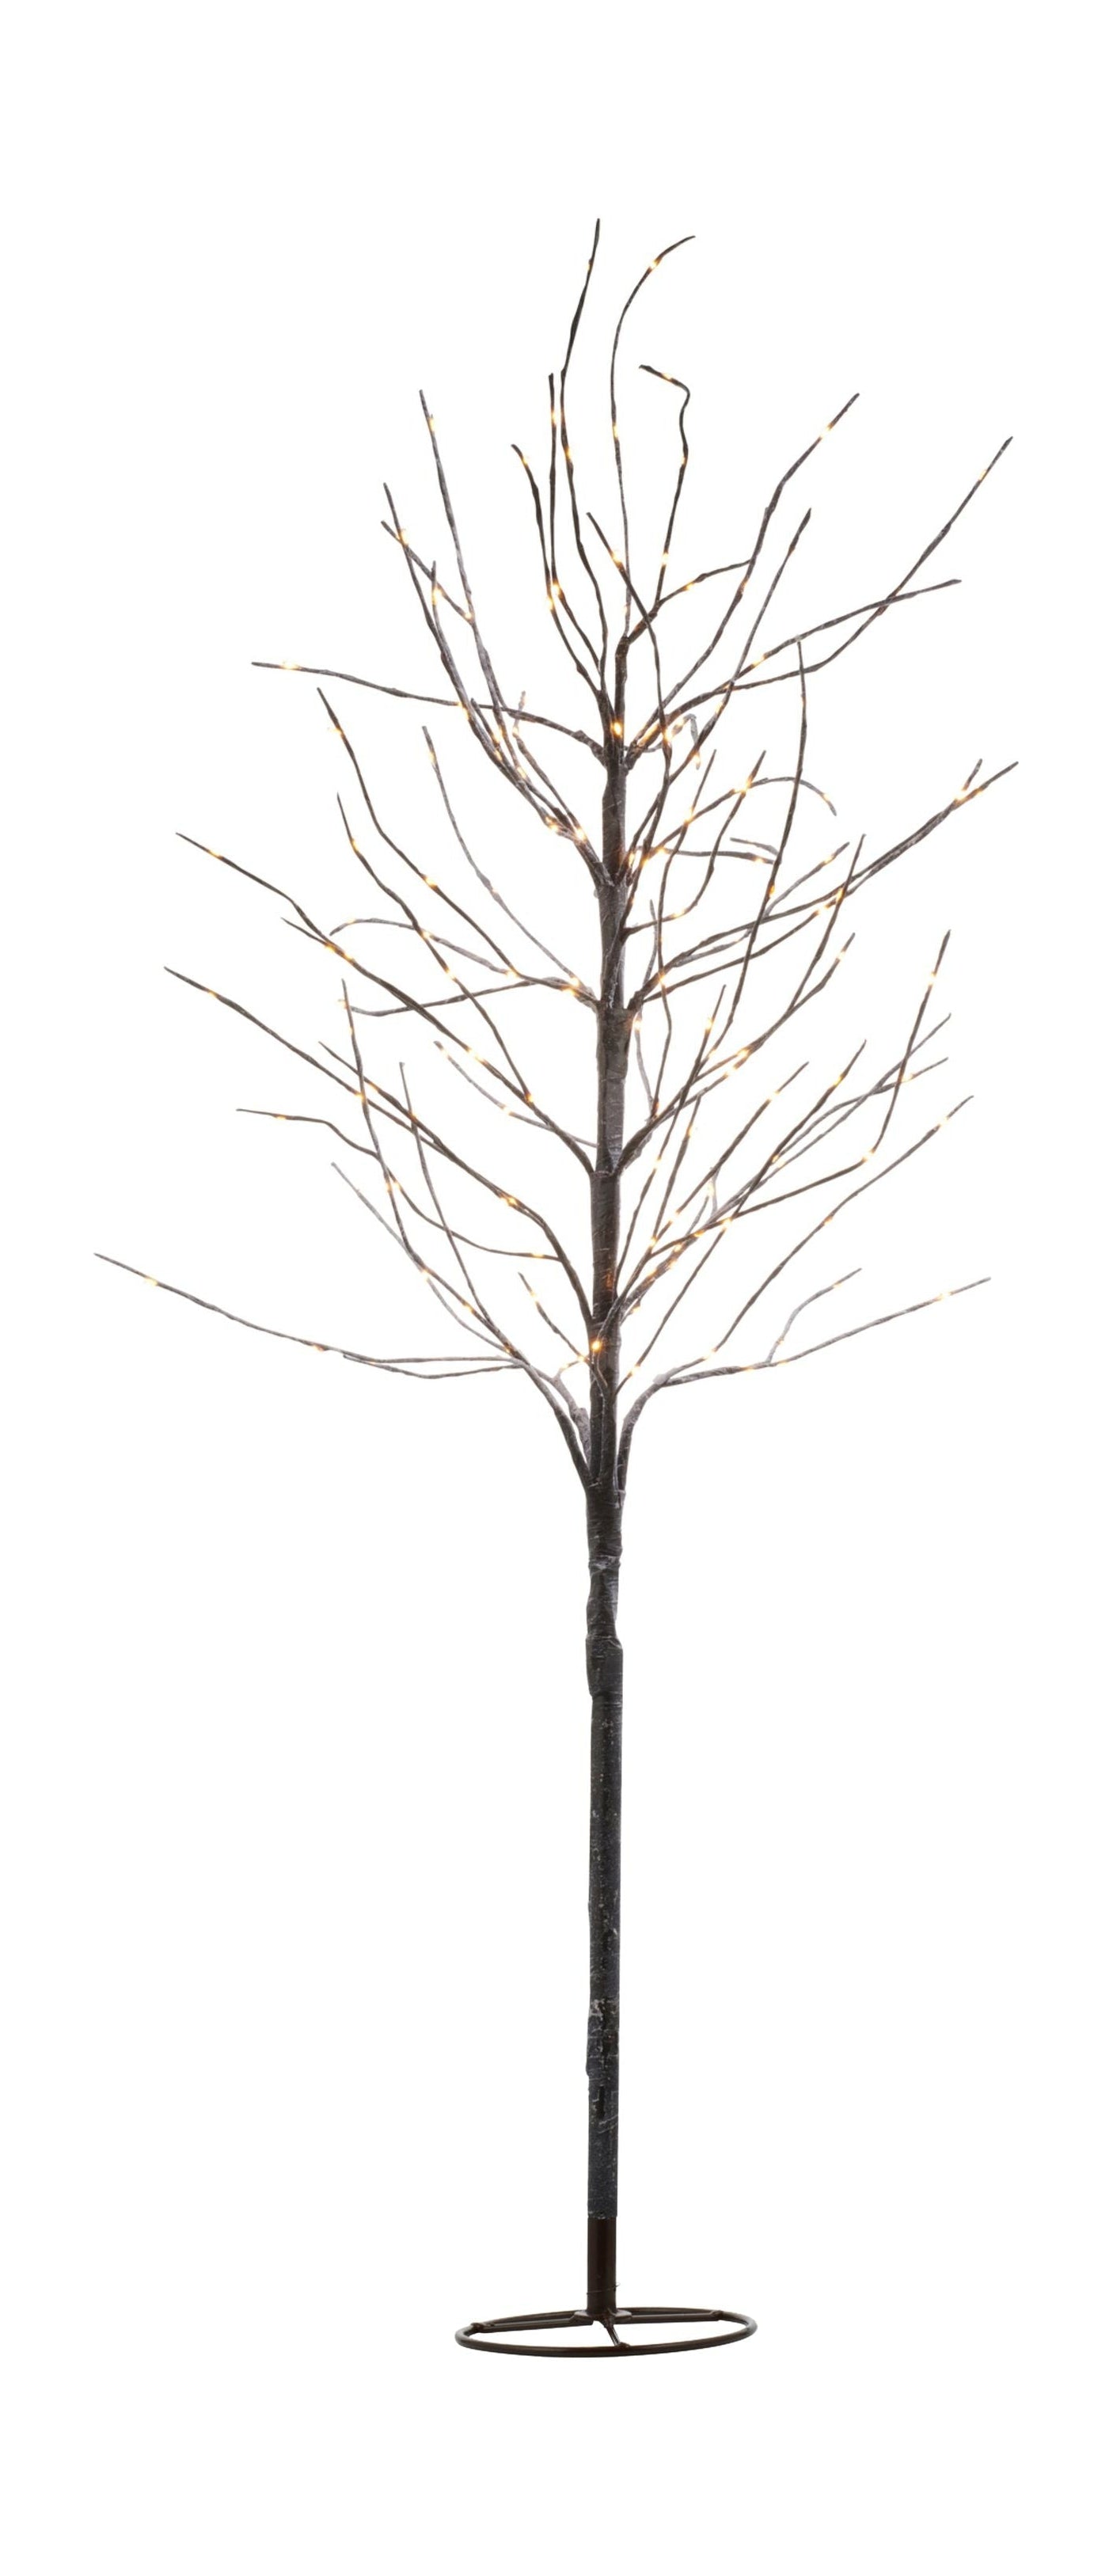 Sirius Kira Tree 280 Le ds H1,8m Ø50 cm+5m, marrone/nevoso